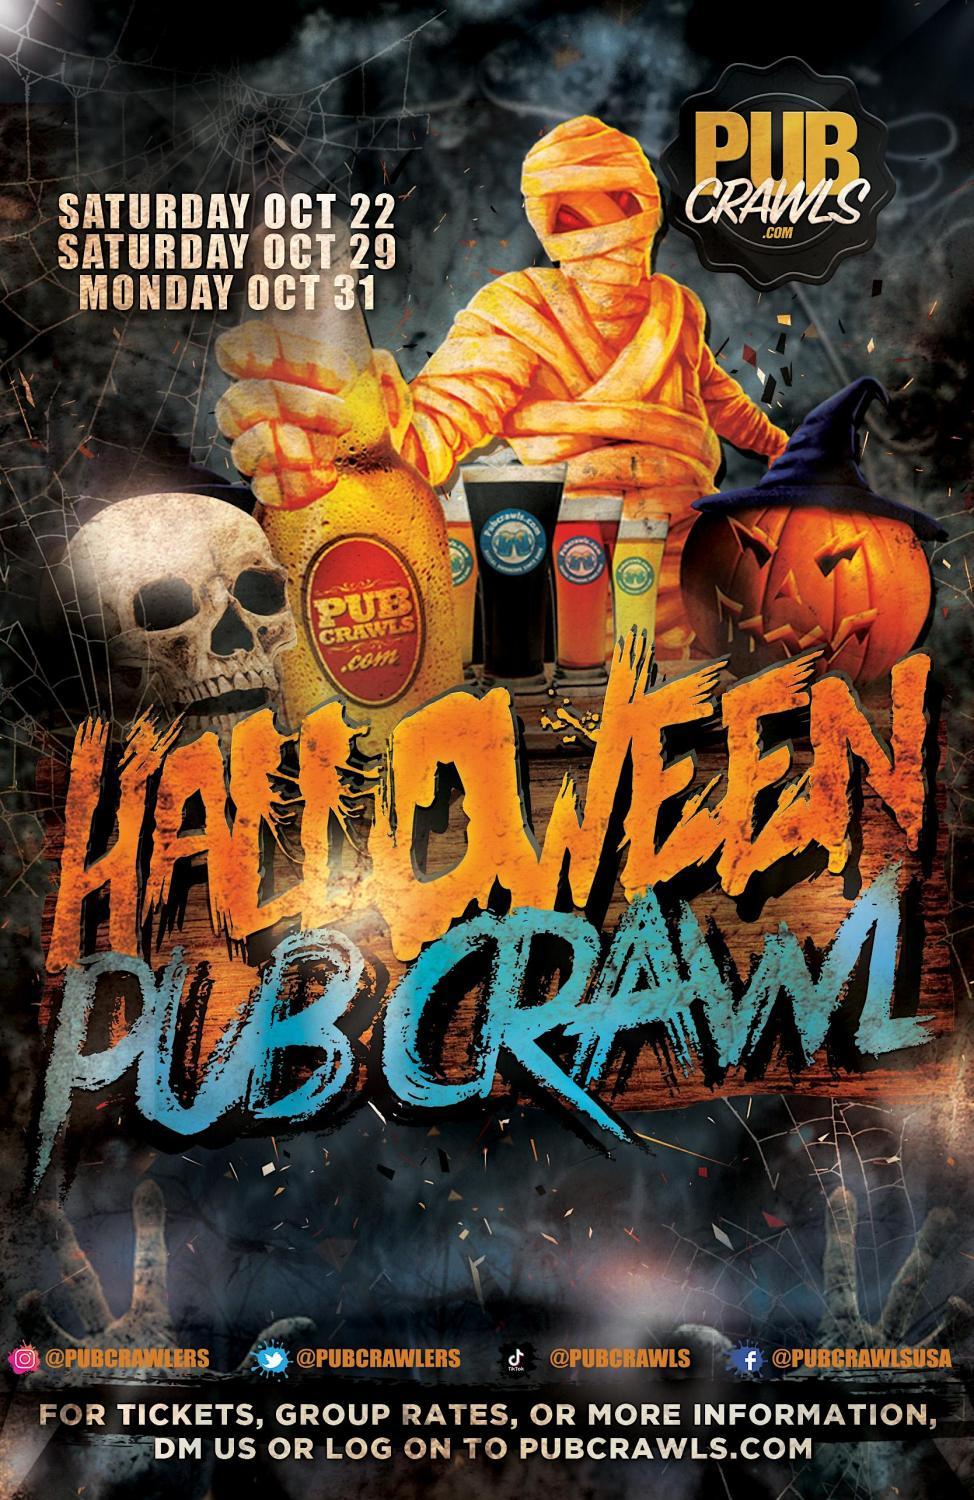 Ogden Happy Hour Halloweekend Bar Crawl
Sat Oct 22, 1:00 PM - Sat Oct 22, 8:00 PM
in 2 days